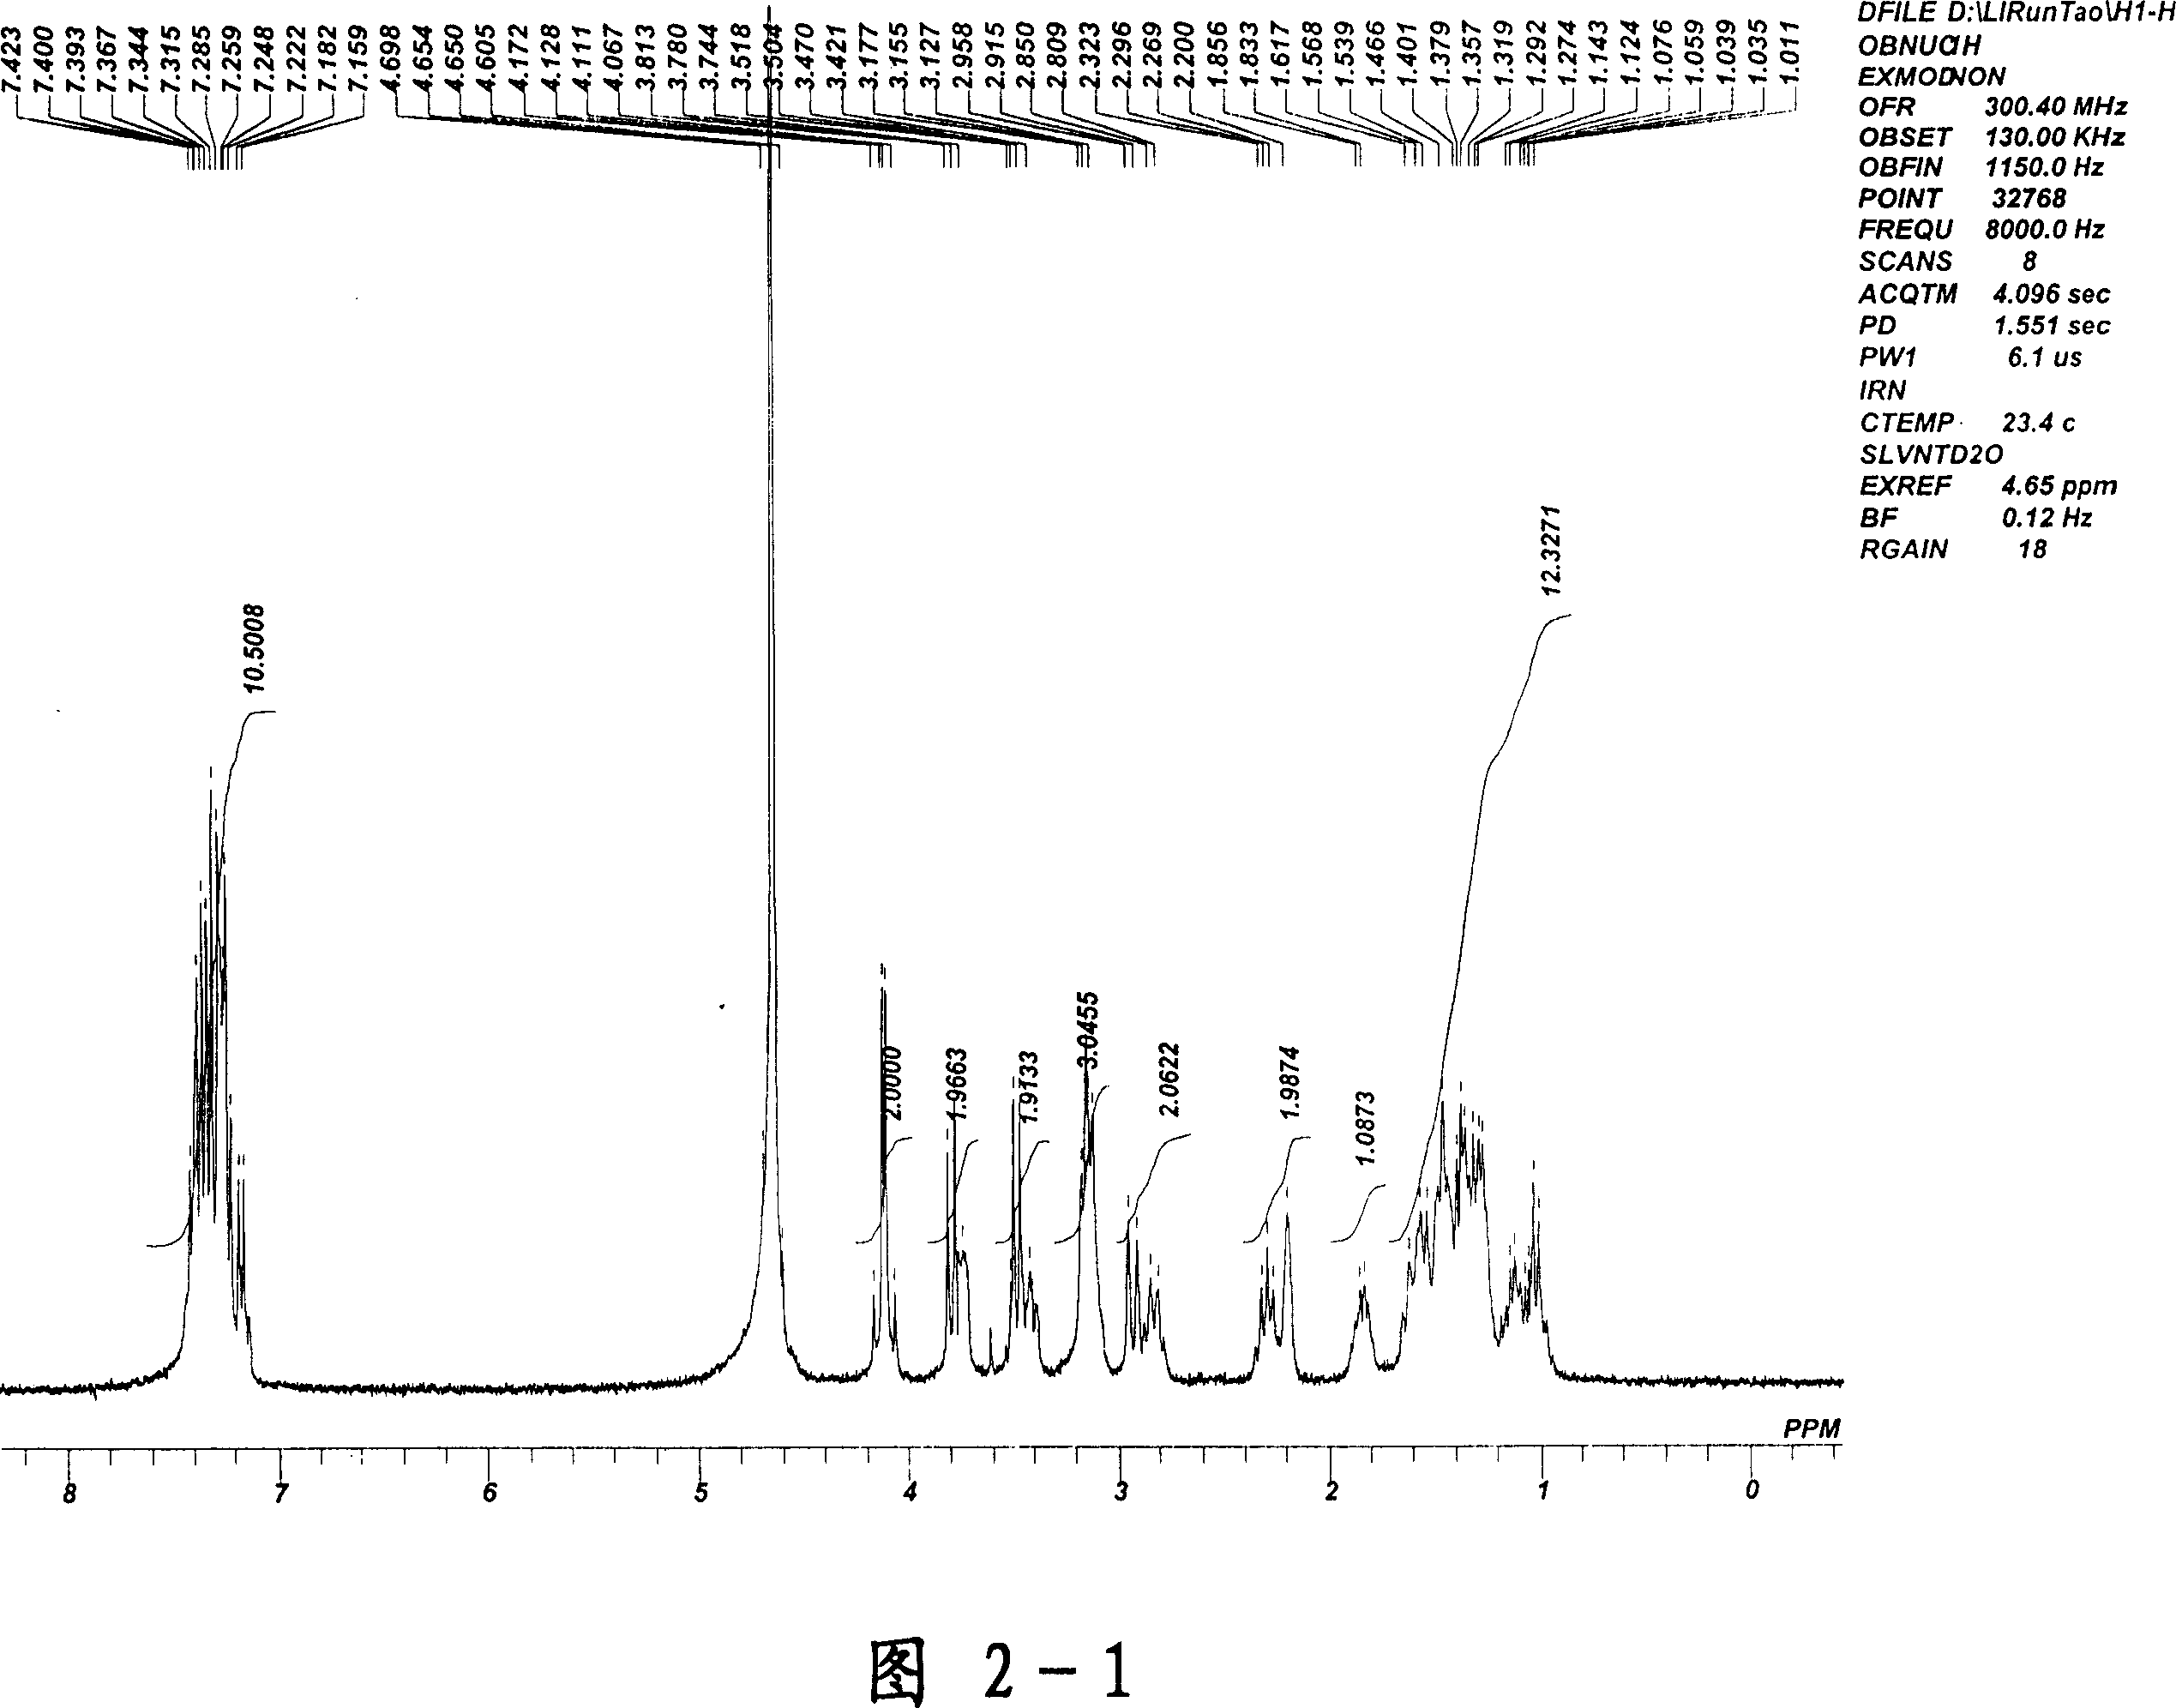 Penehyclidine quaternary ammonium salt and its derivative